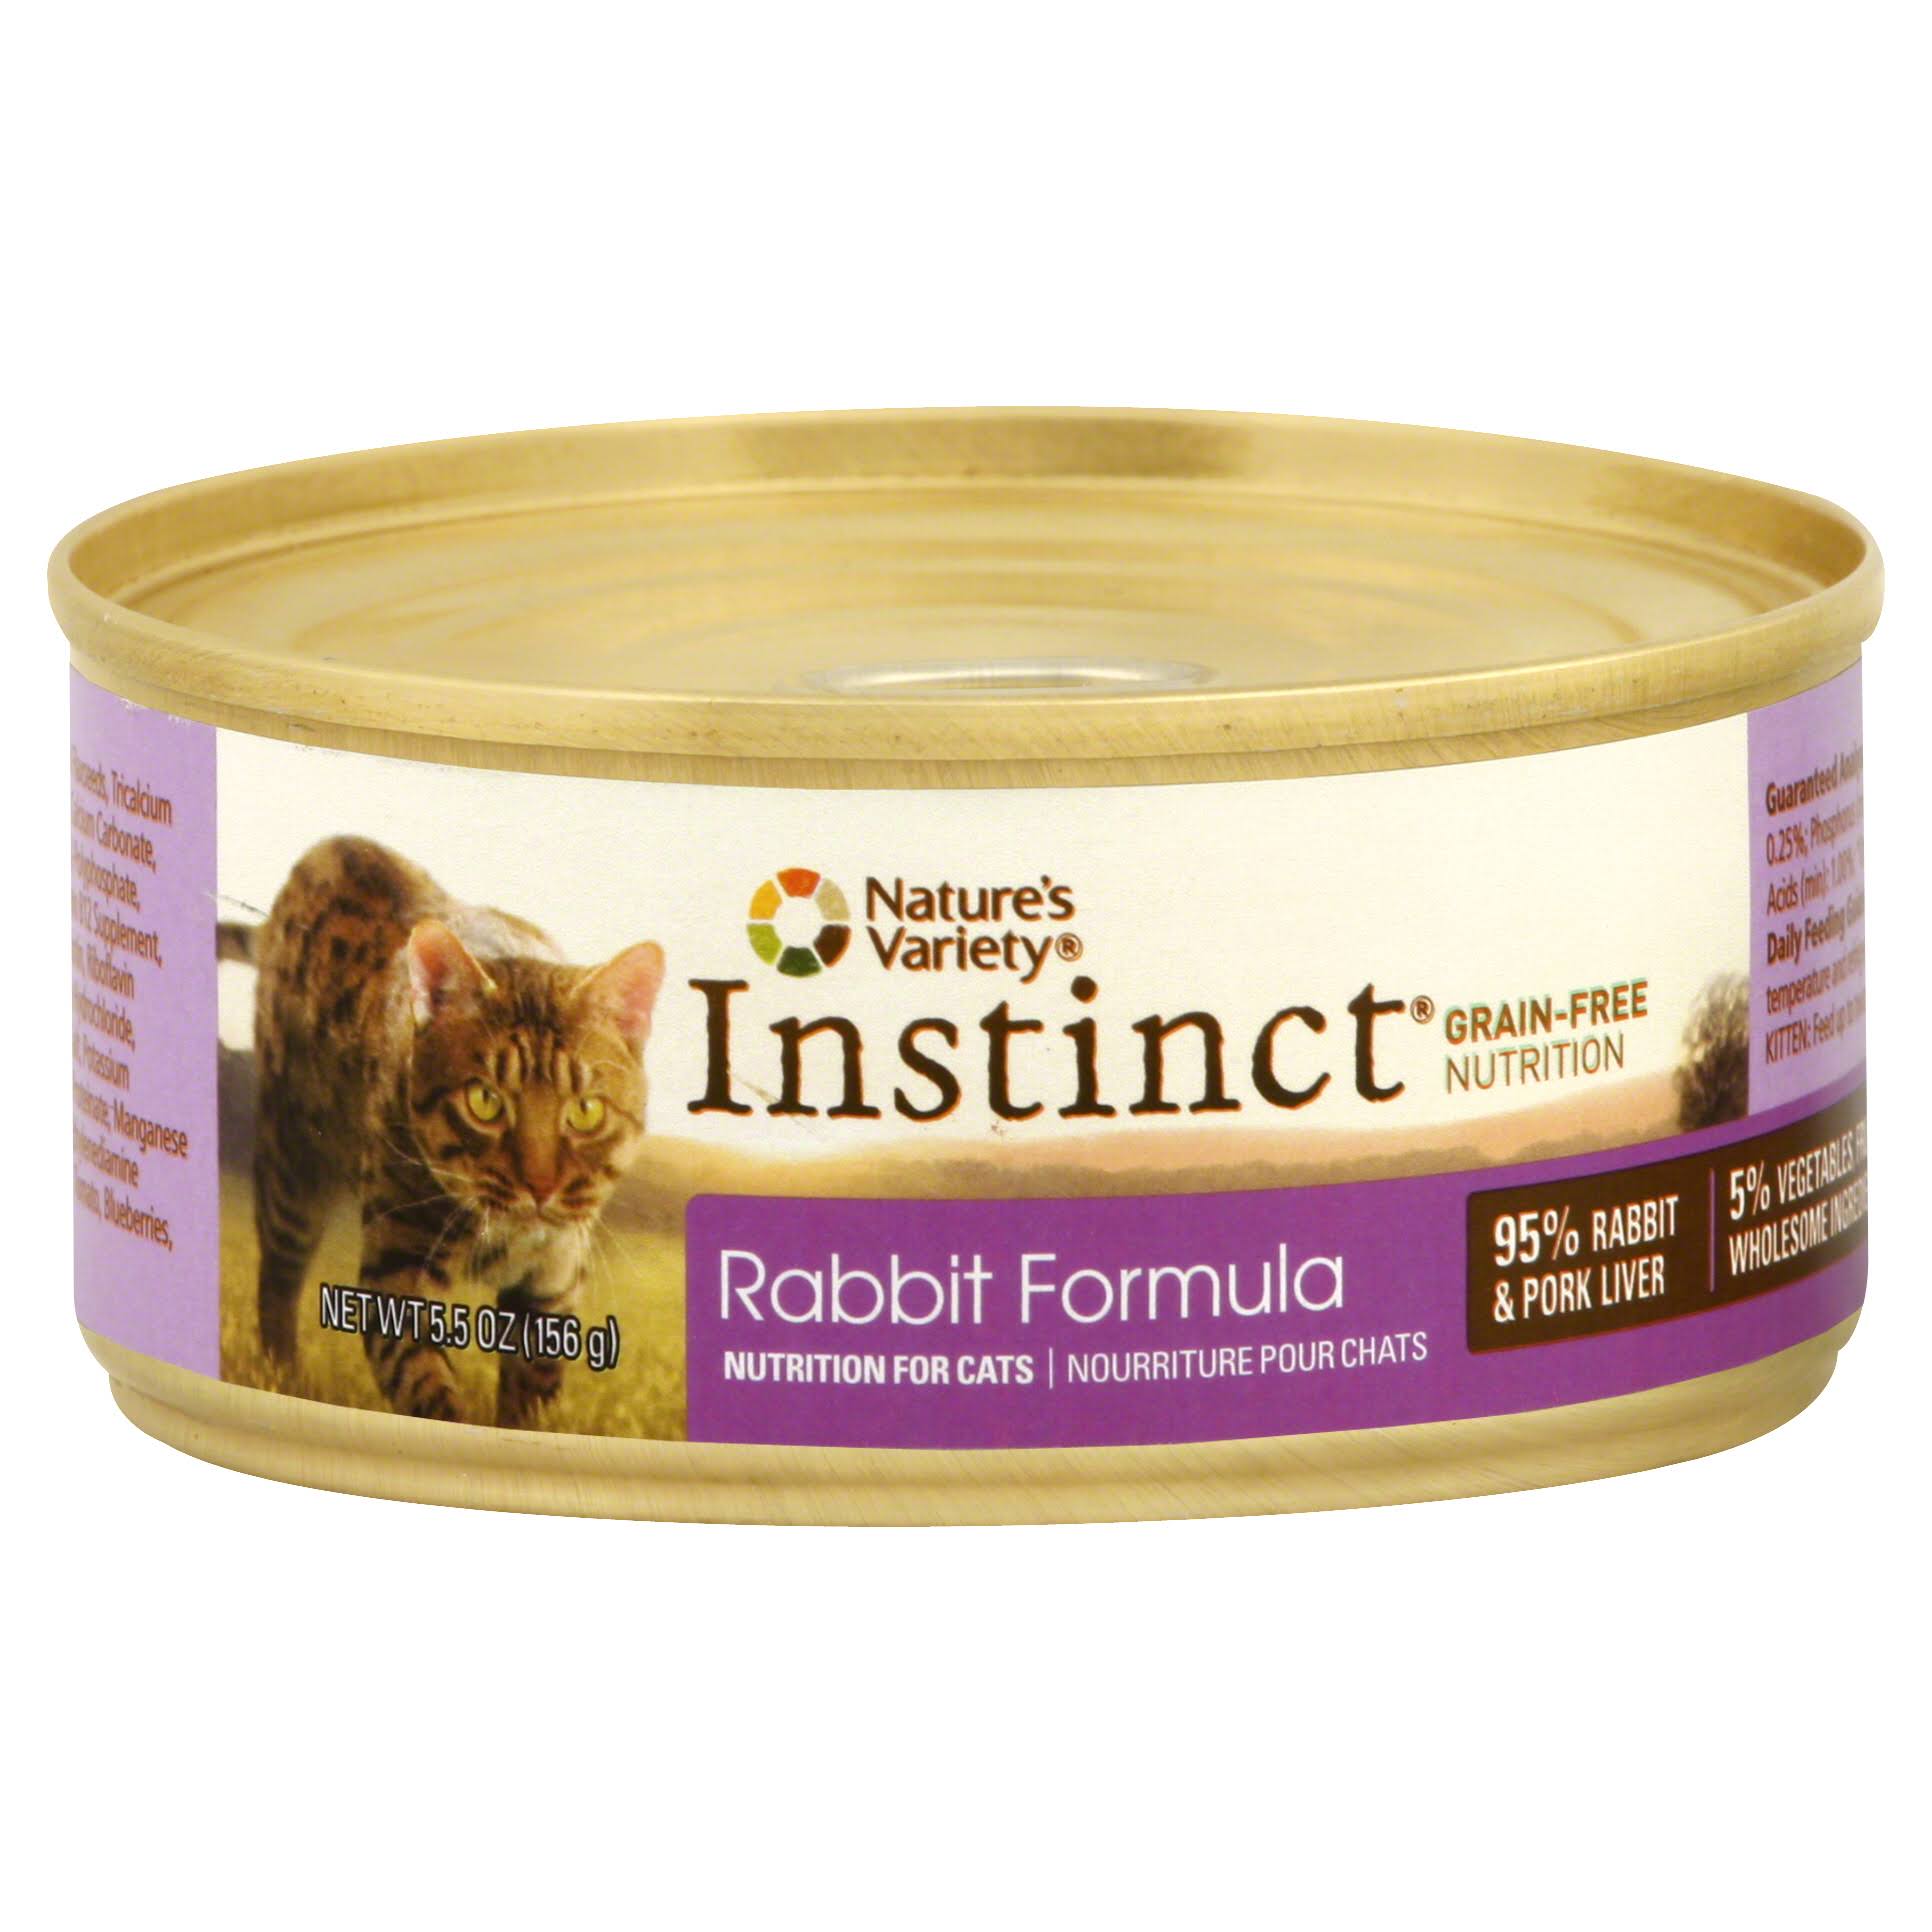 Nature's Variety Instinct Cat Food - Rabbit Formula